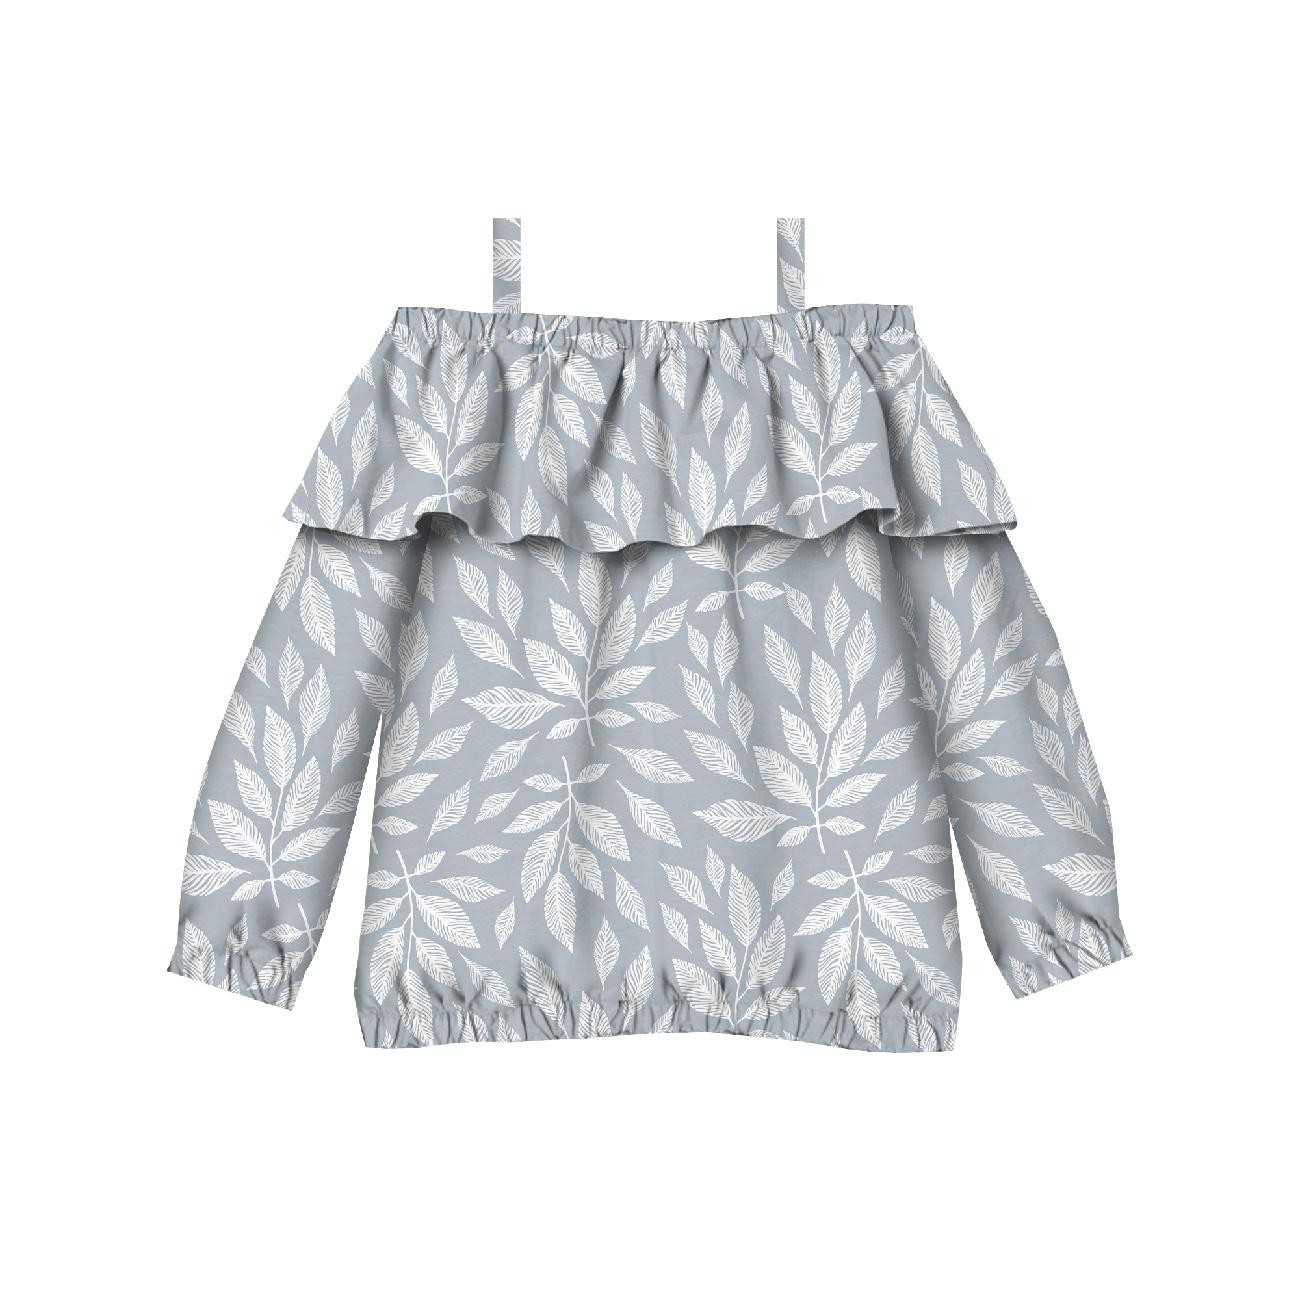 Bardot neckline blouse (VIKI) - WHITE LEAVES - sewing set